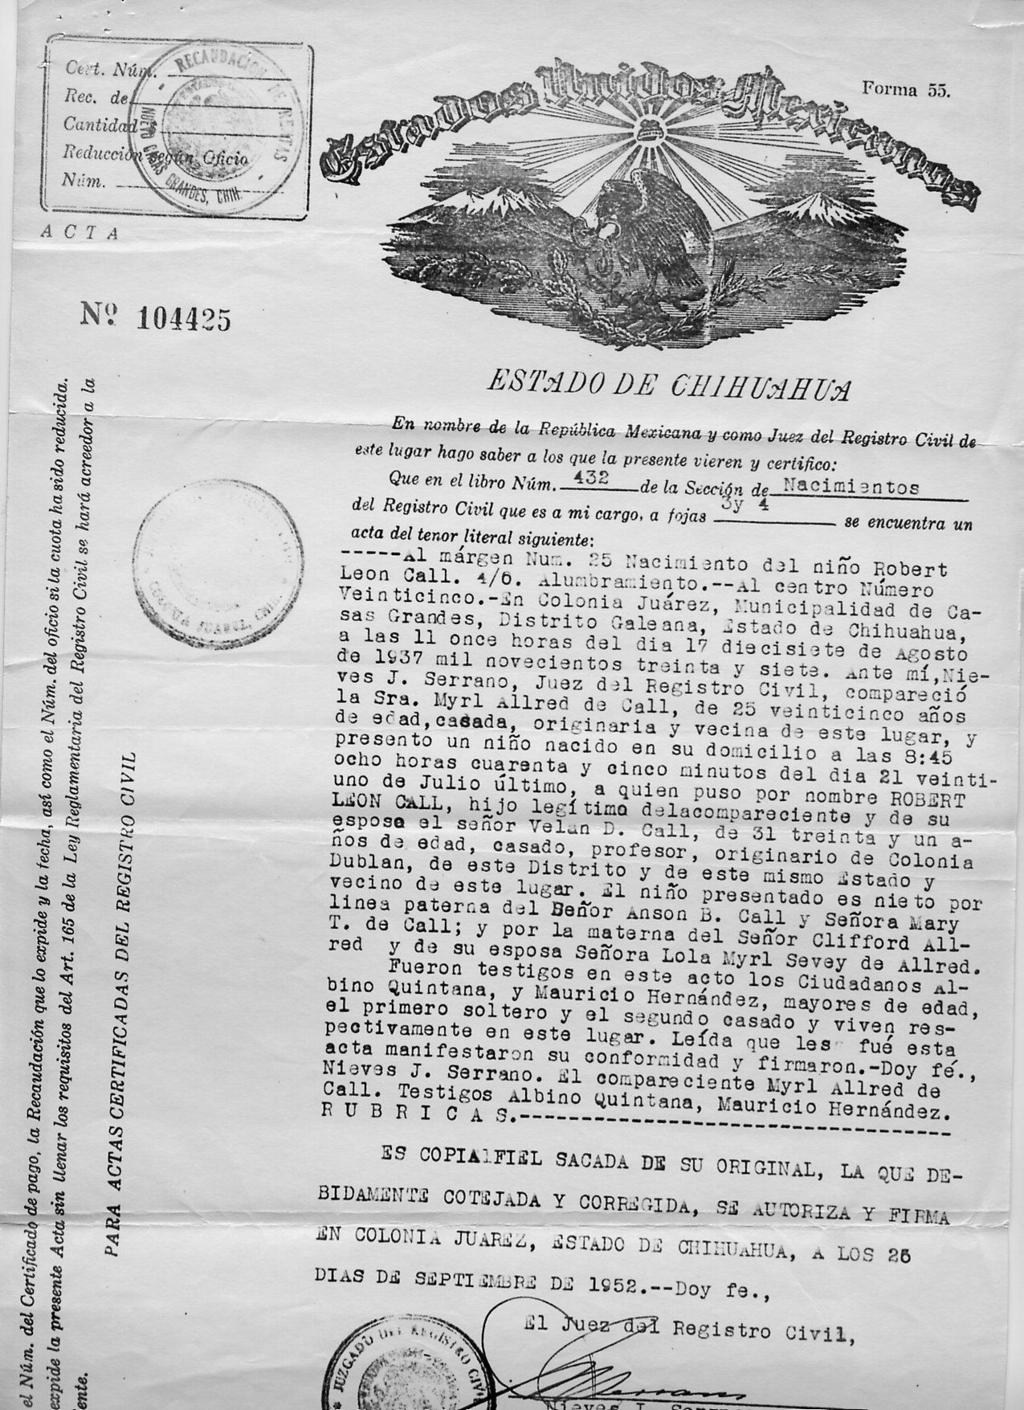 Birth Certificate: Robert Leon Call 21 July 1937 Colonia Juarez, Chihuahua, Mexico Parents: